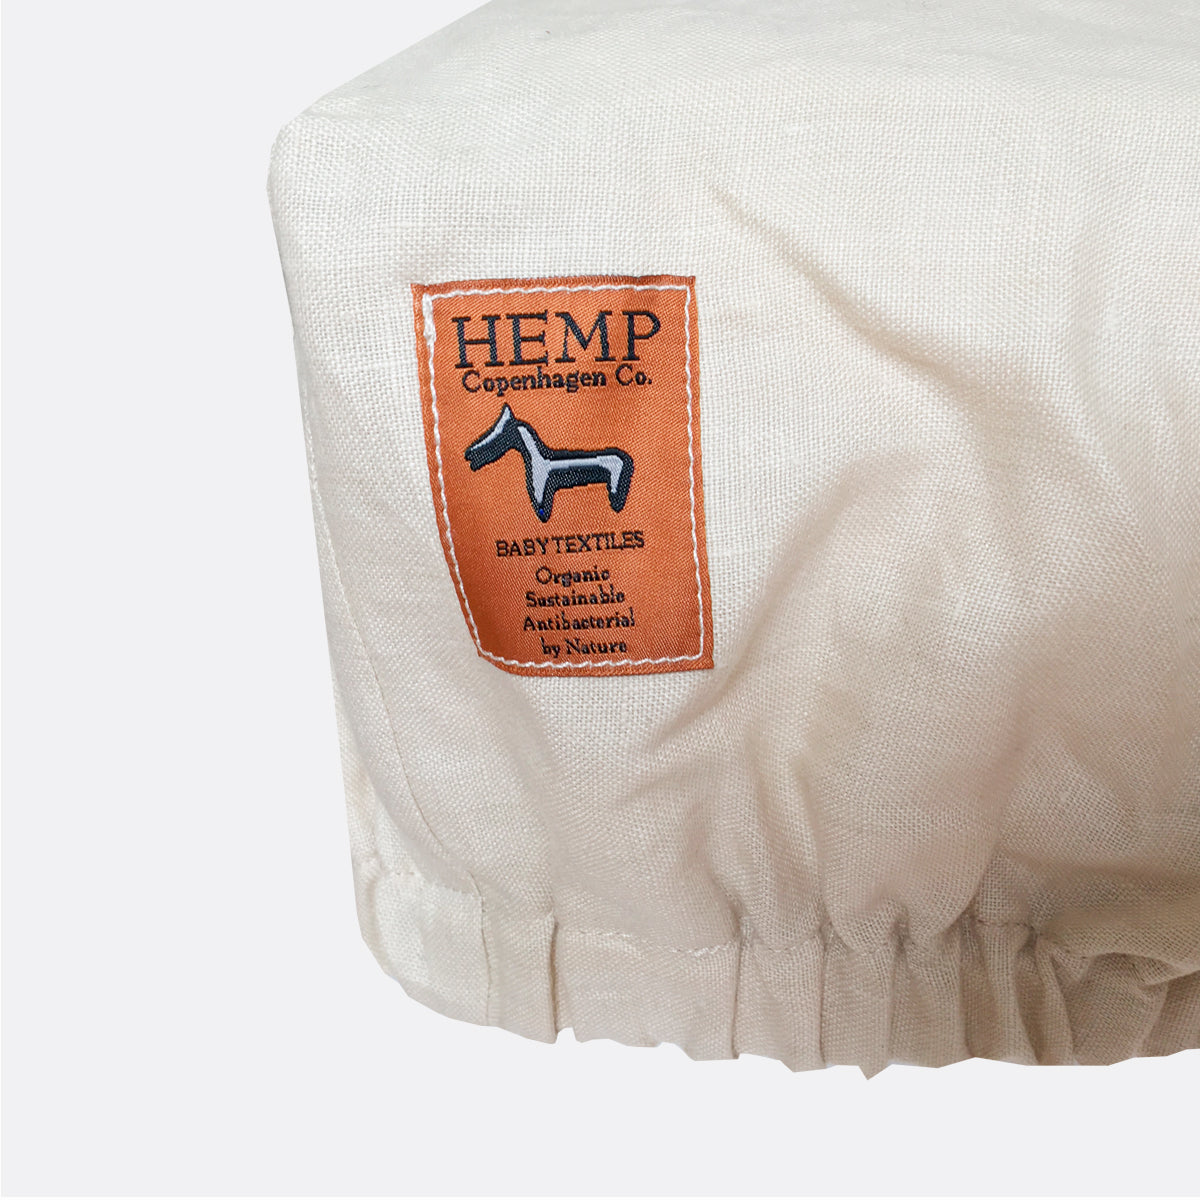 Hemp Copenhagen Co. Fitted sheet Baby 100% Hemp White or Natural Grey